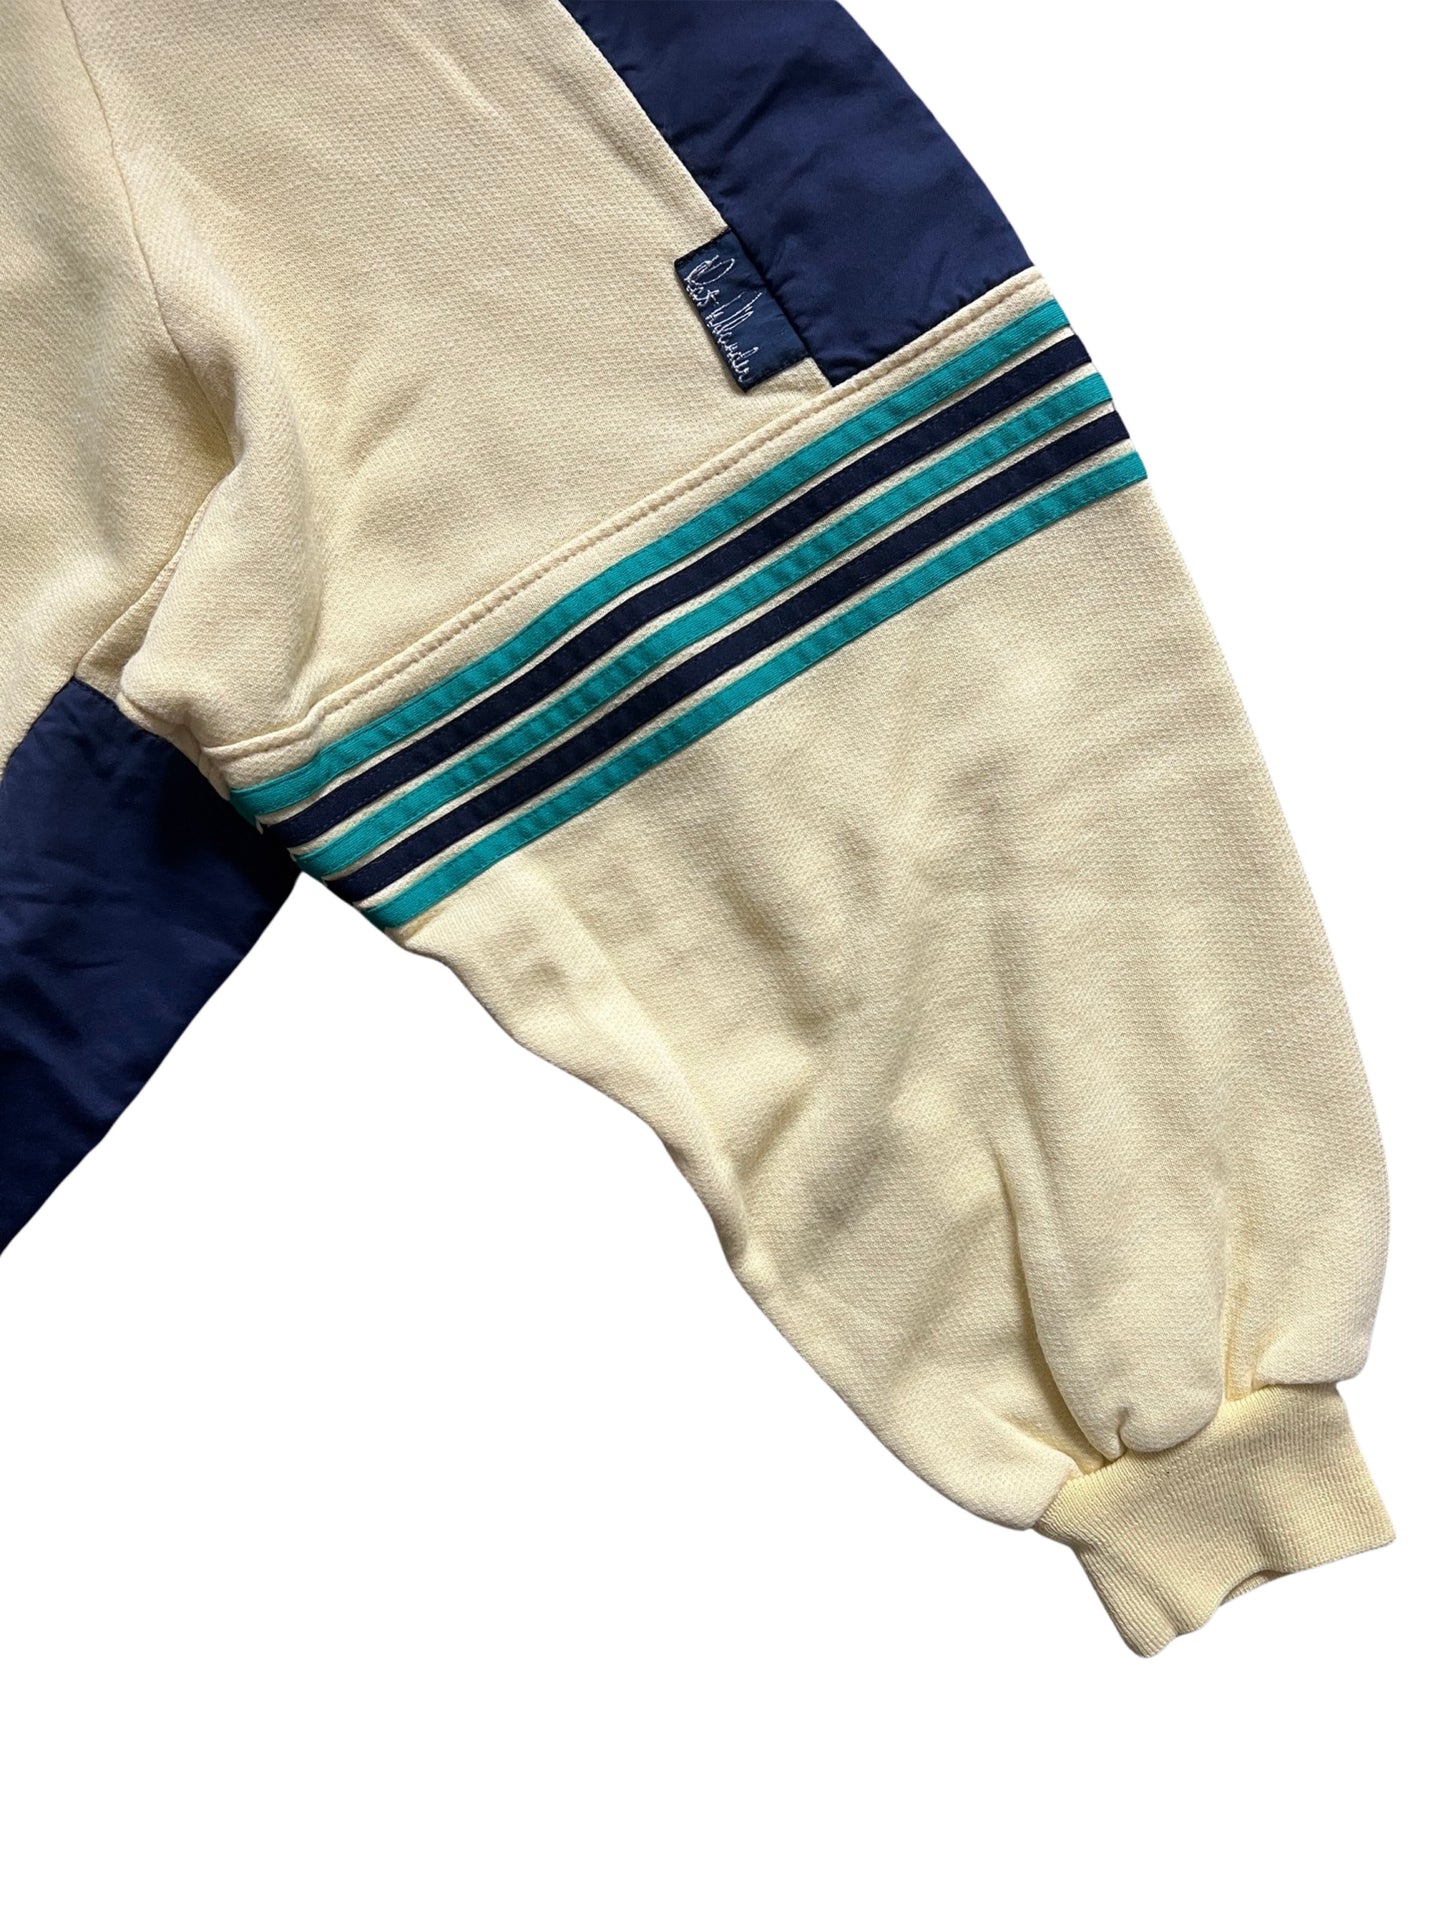 Vintage Sergio Tacchini Crewneck Sweatshirt (circa 1980s)